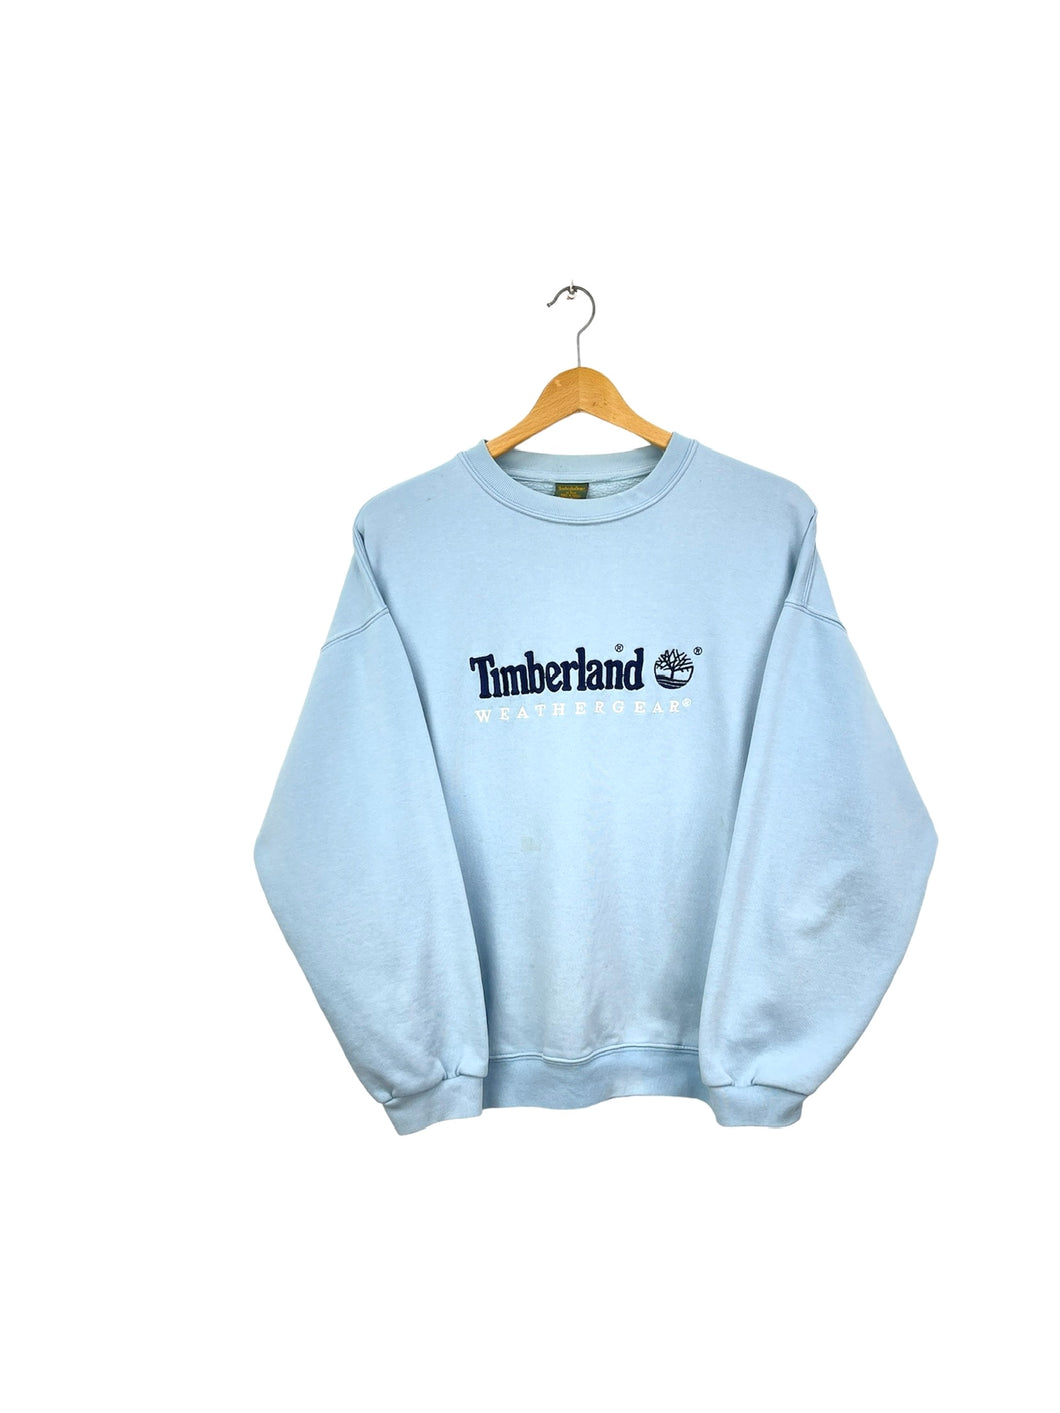 Timberland Sweatshirt - Large